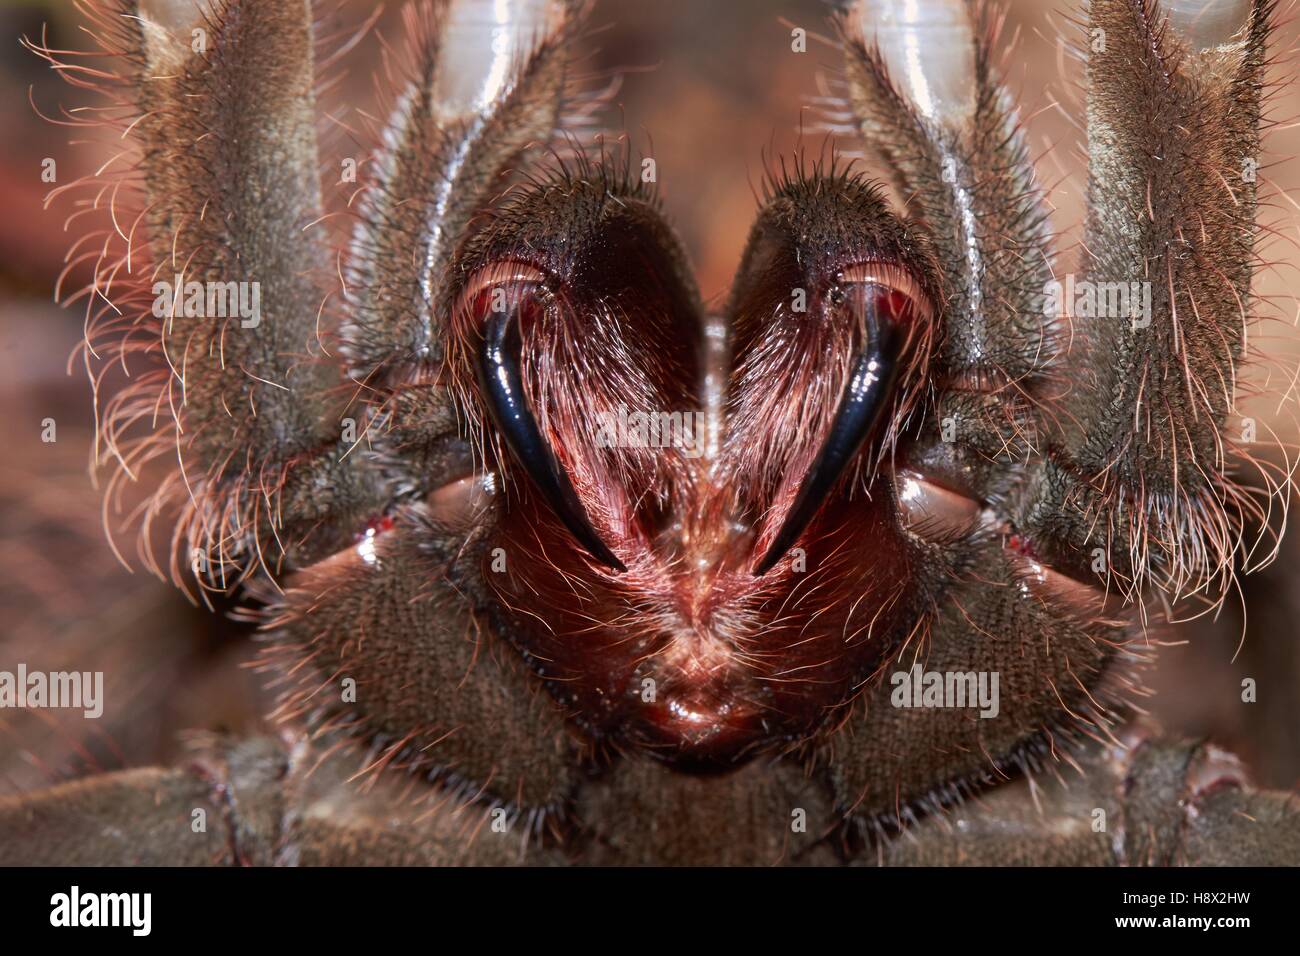 goliath tarantula eating a bird